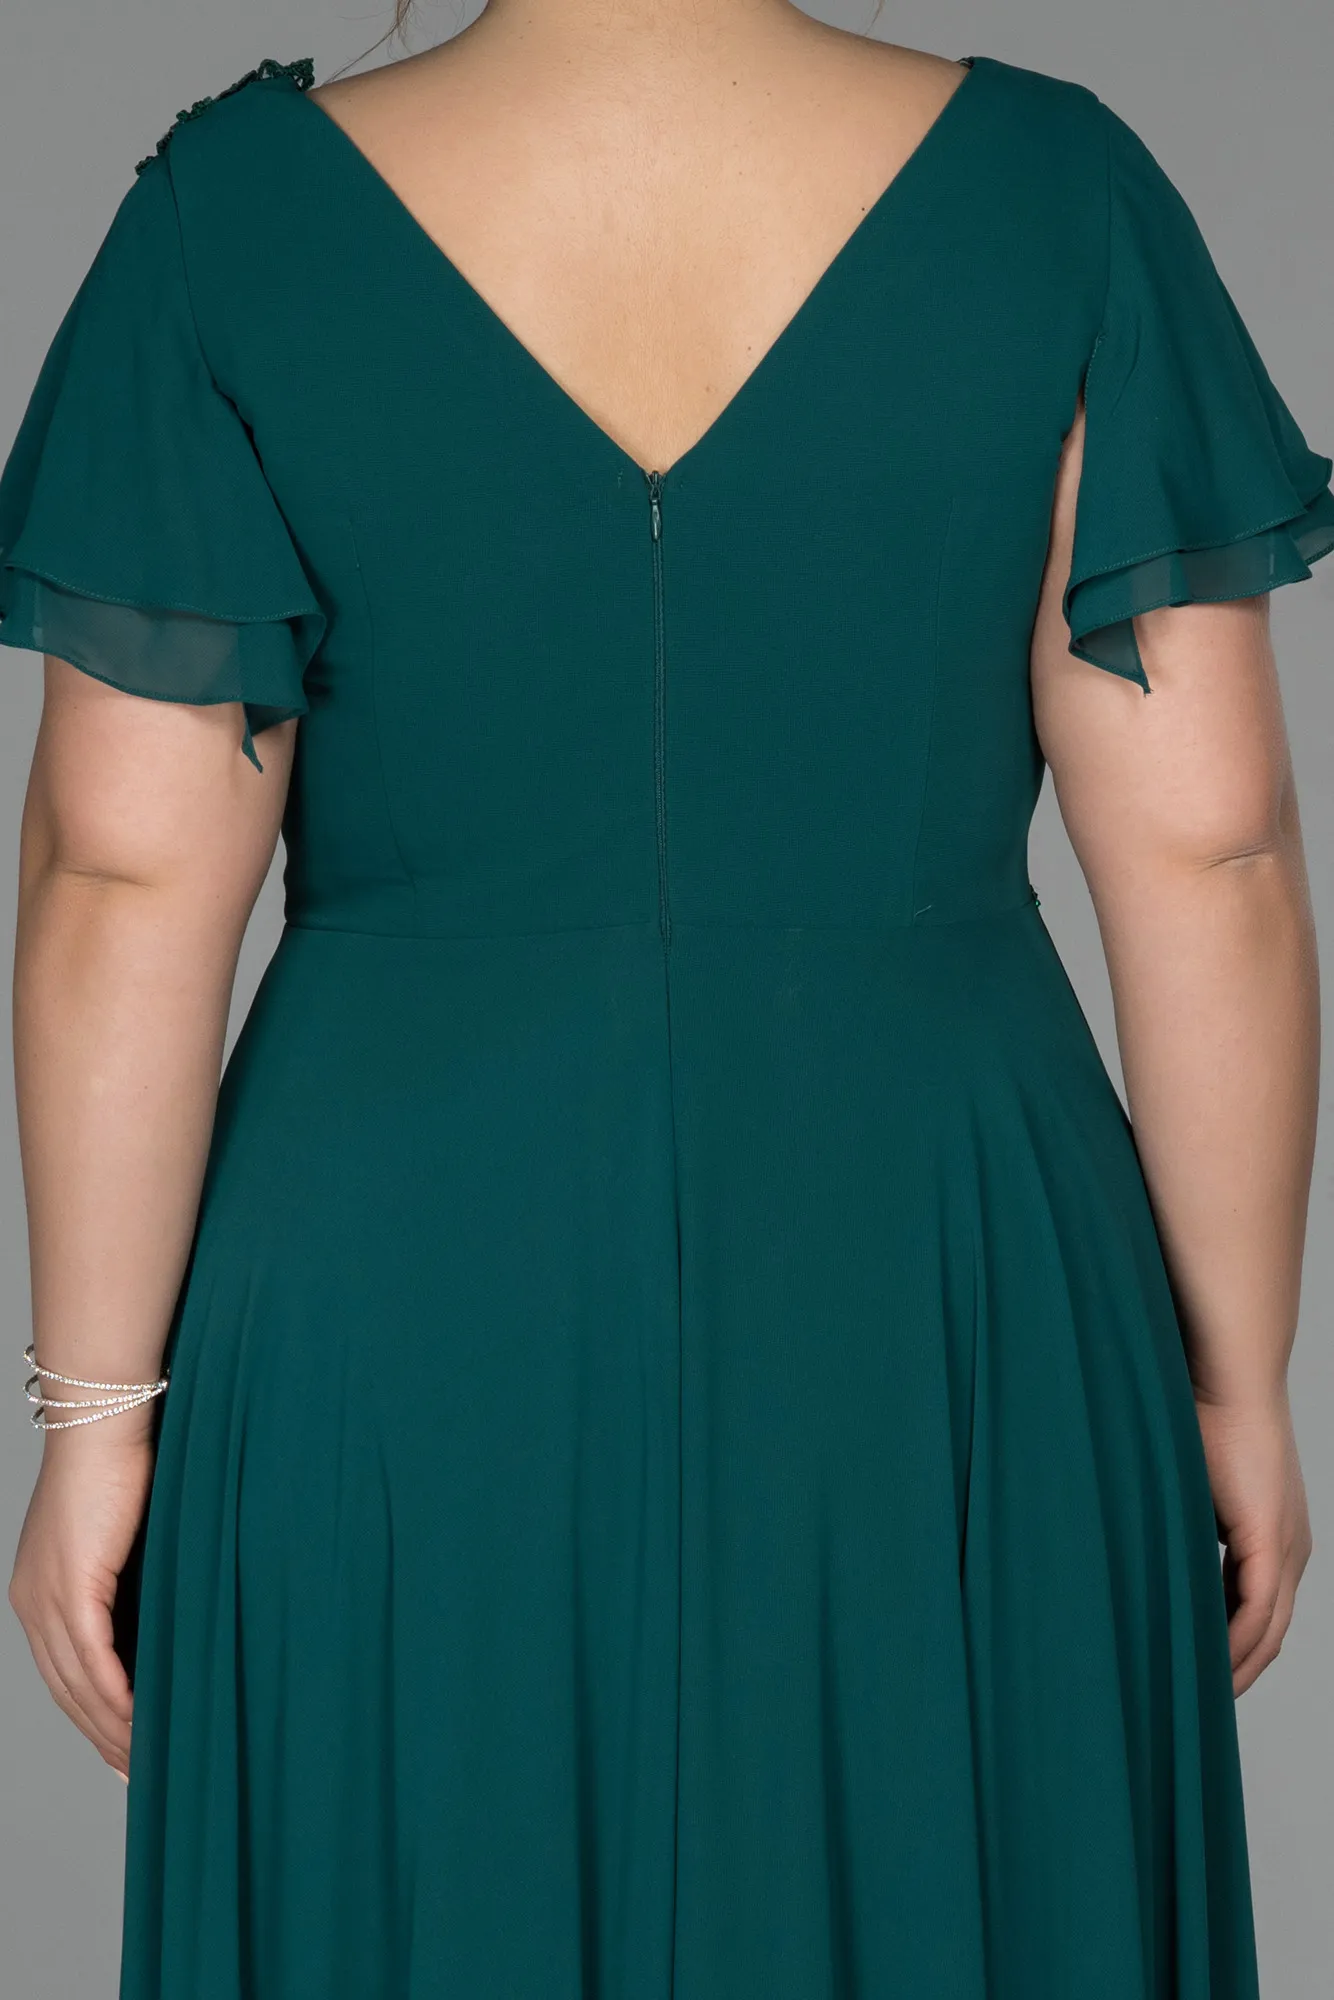 Emerald Green-Long Plus Size Evening Dress ABU1562